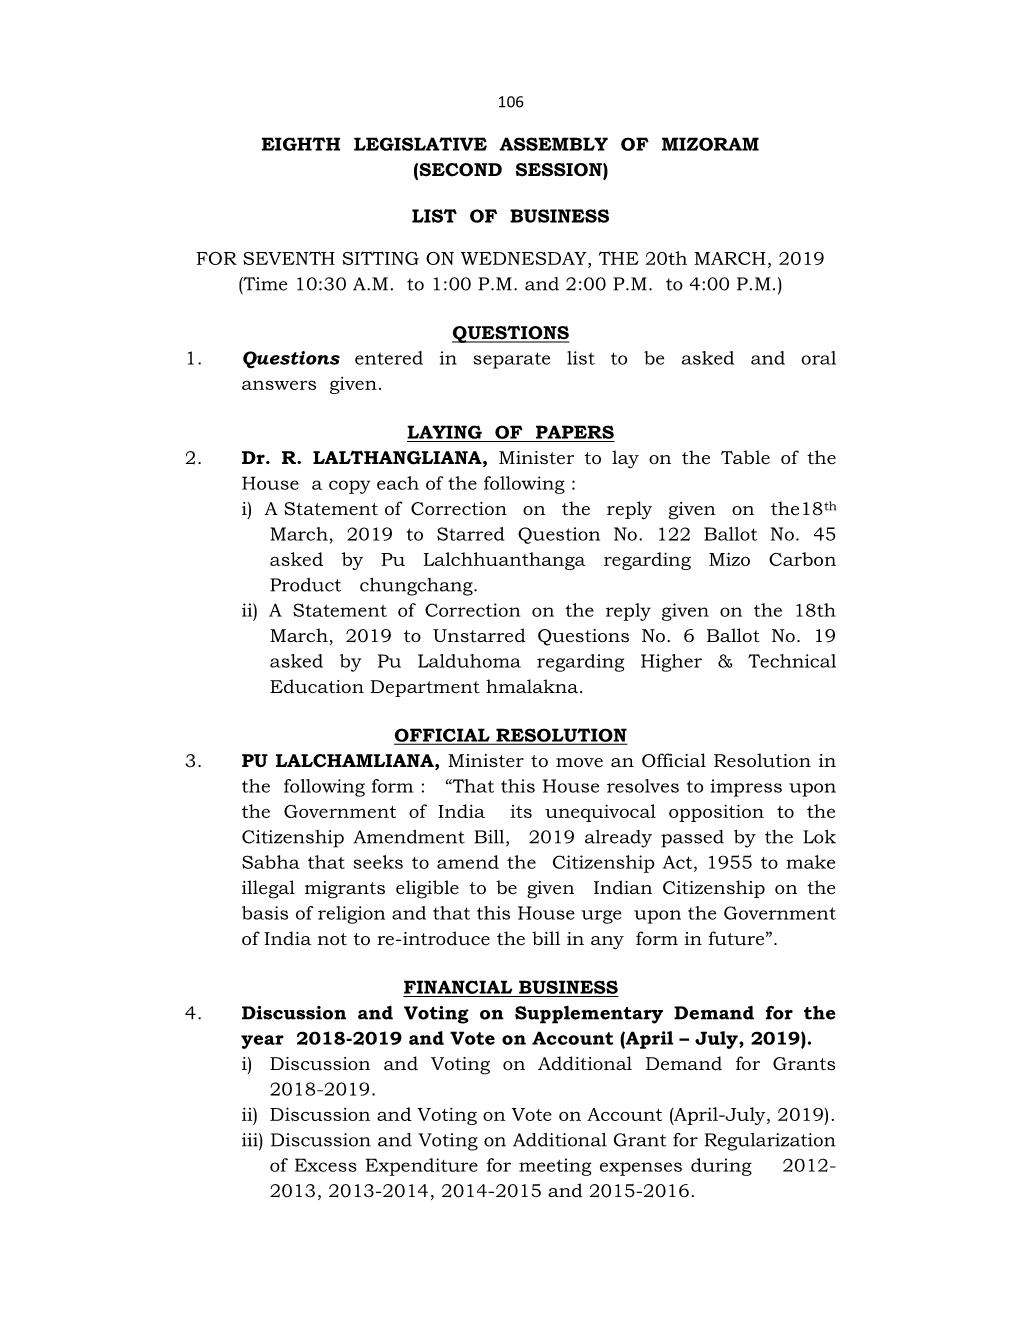 Eighth Legislative Assembly of Mizoram (Second Session)